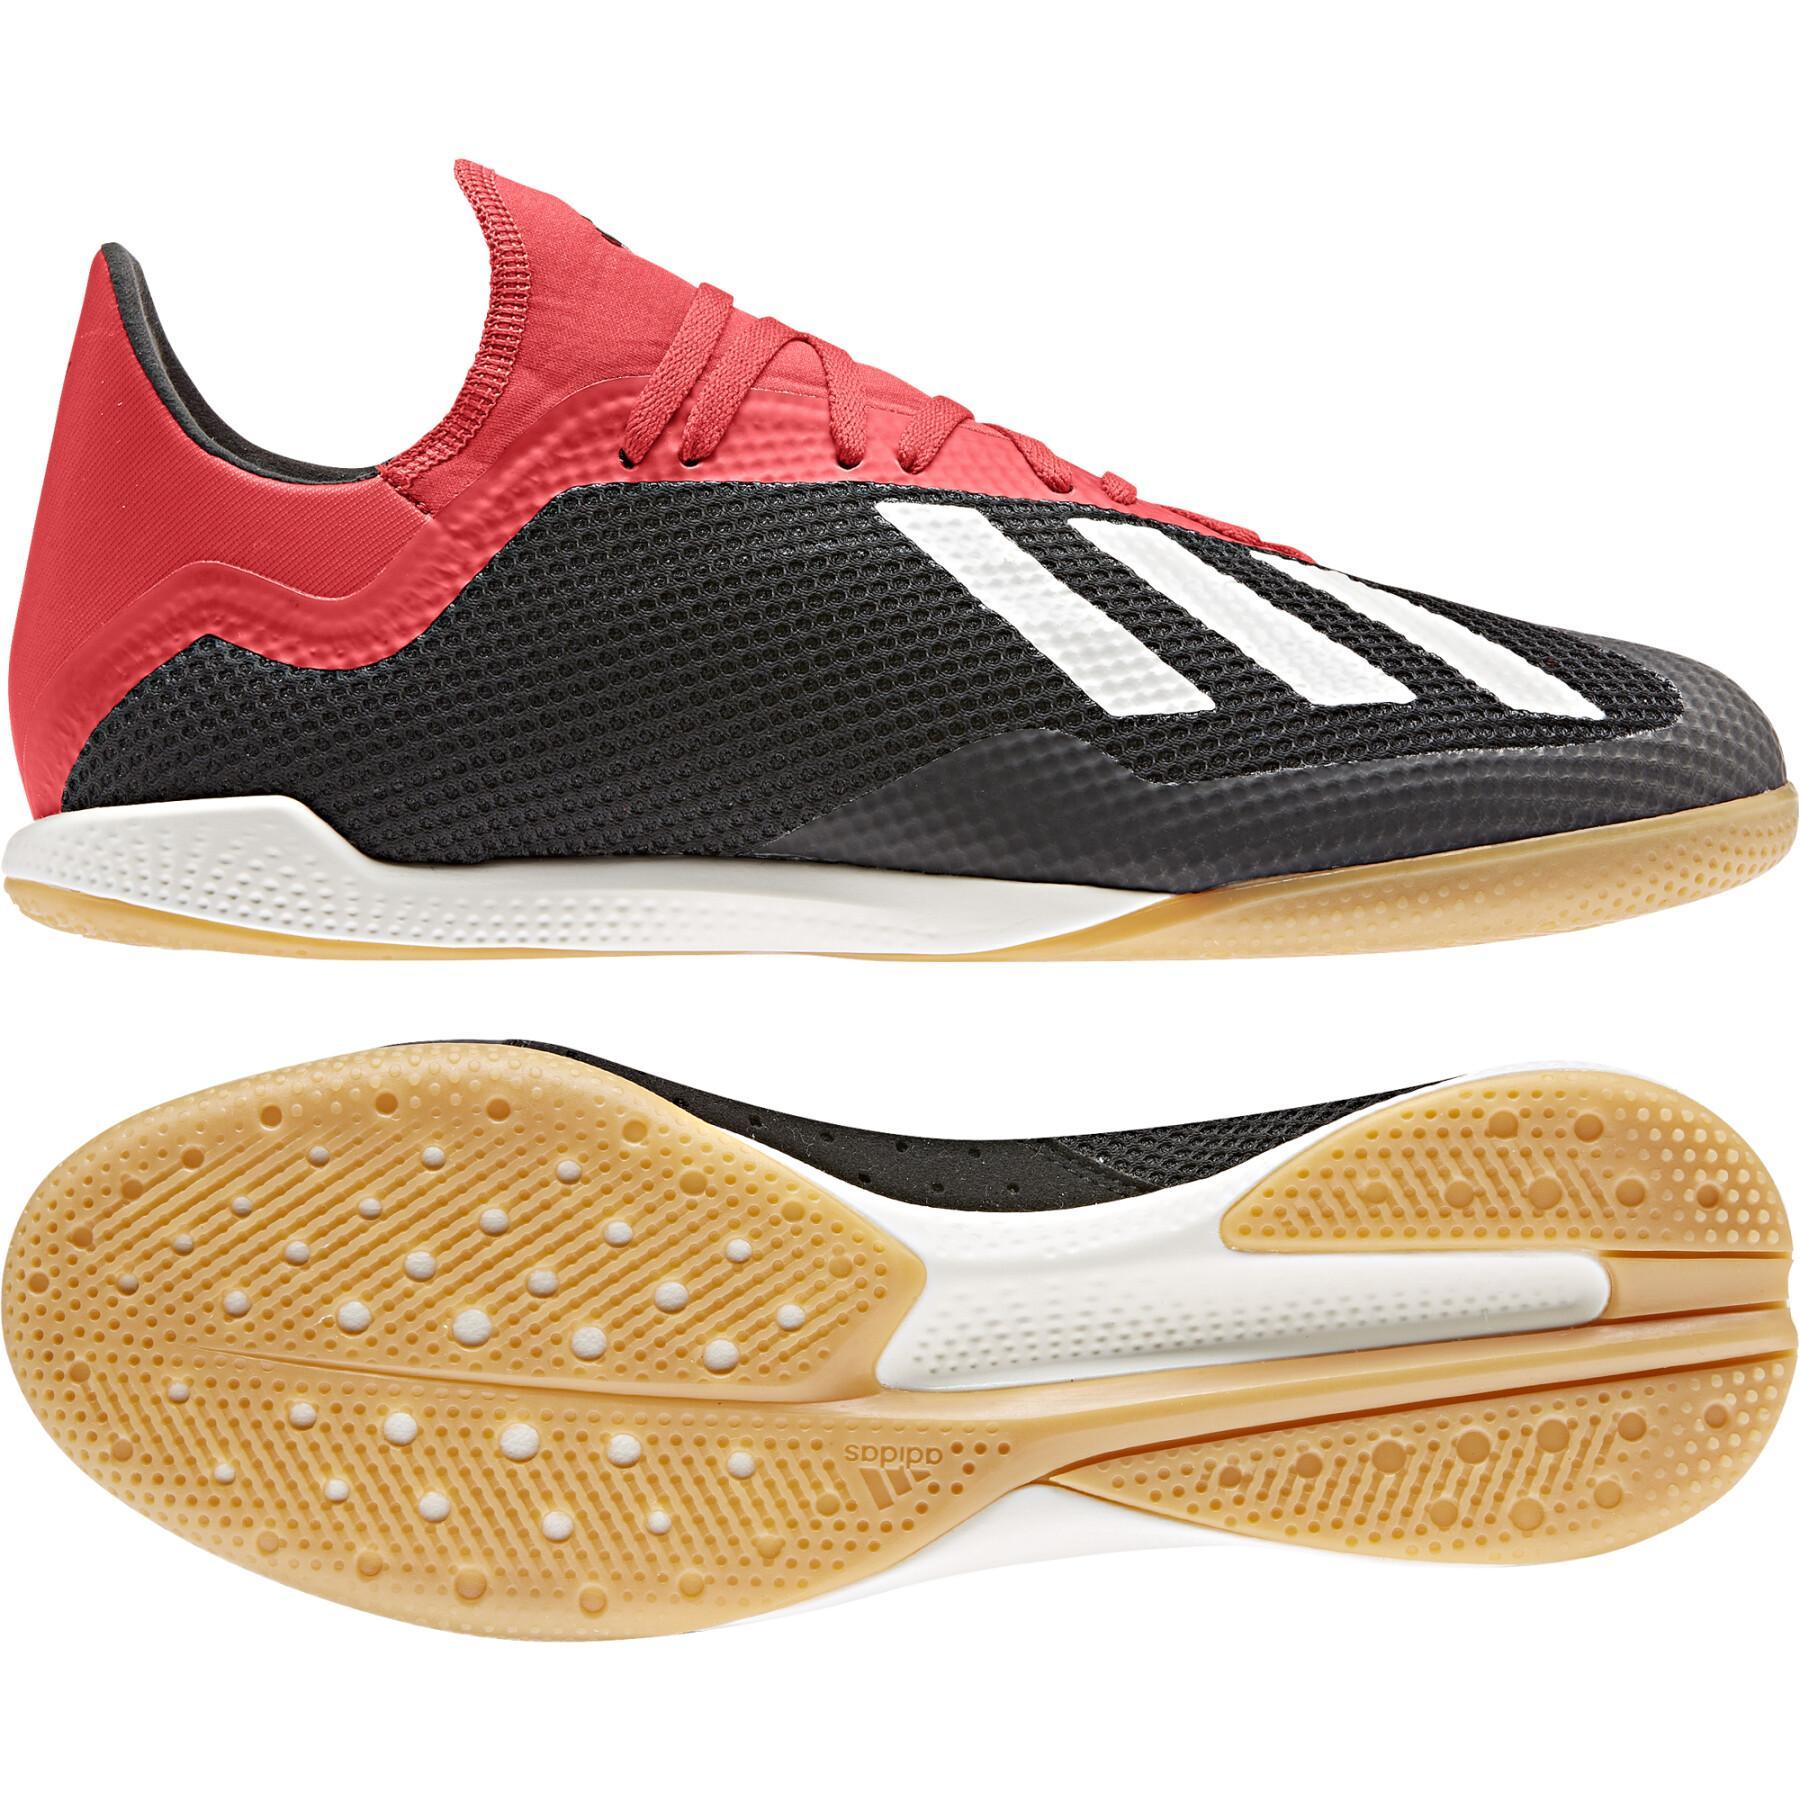 Chaussures de football adidas X Tango 18.3 IN